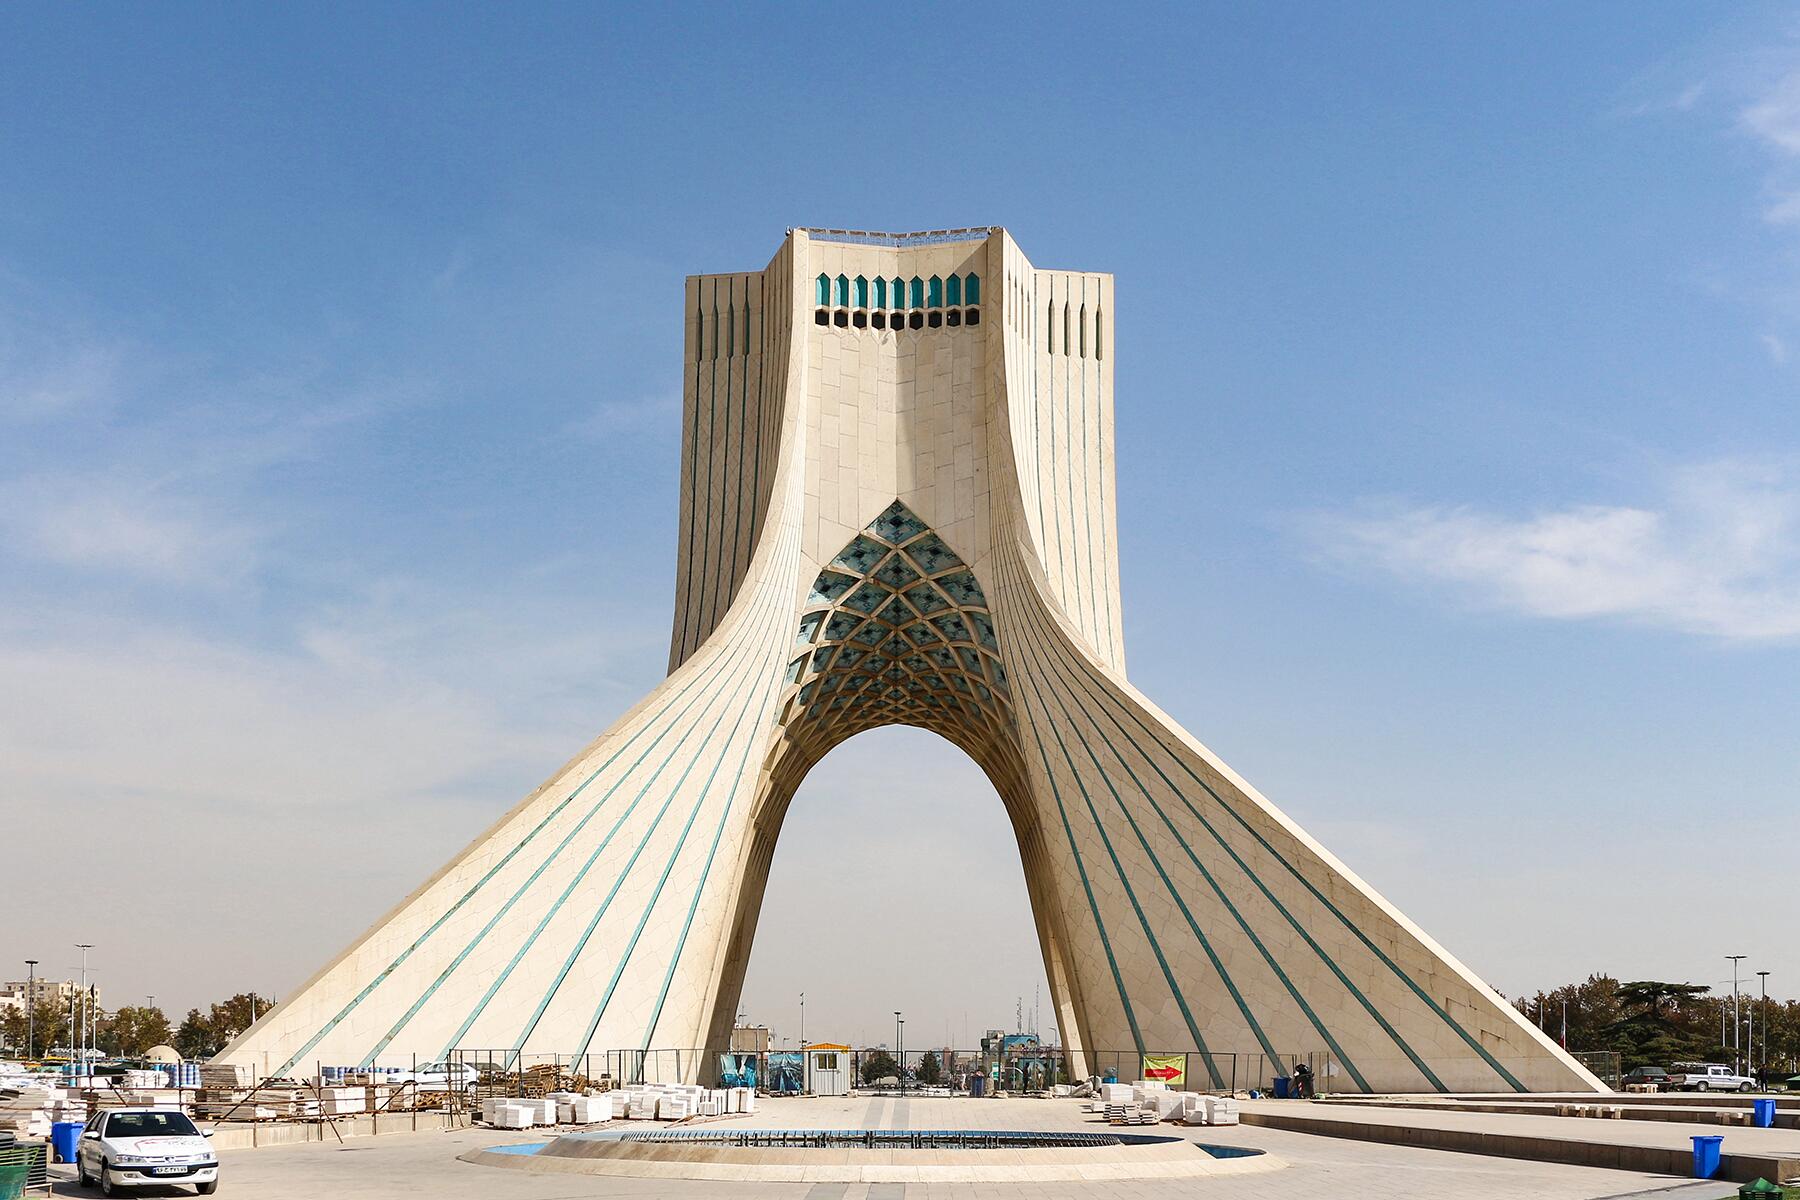 09_IranCulturalSites__AzadiTower_9.-Azadi_Tower_Tehran.jpg